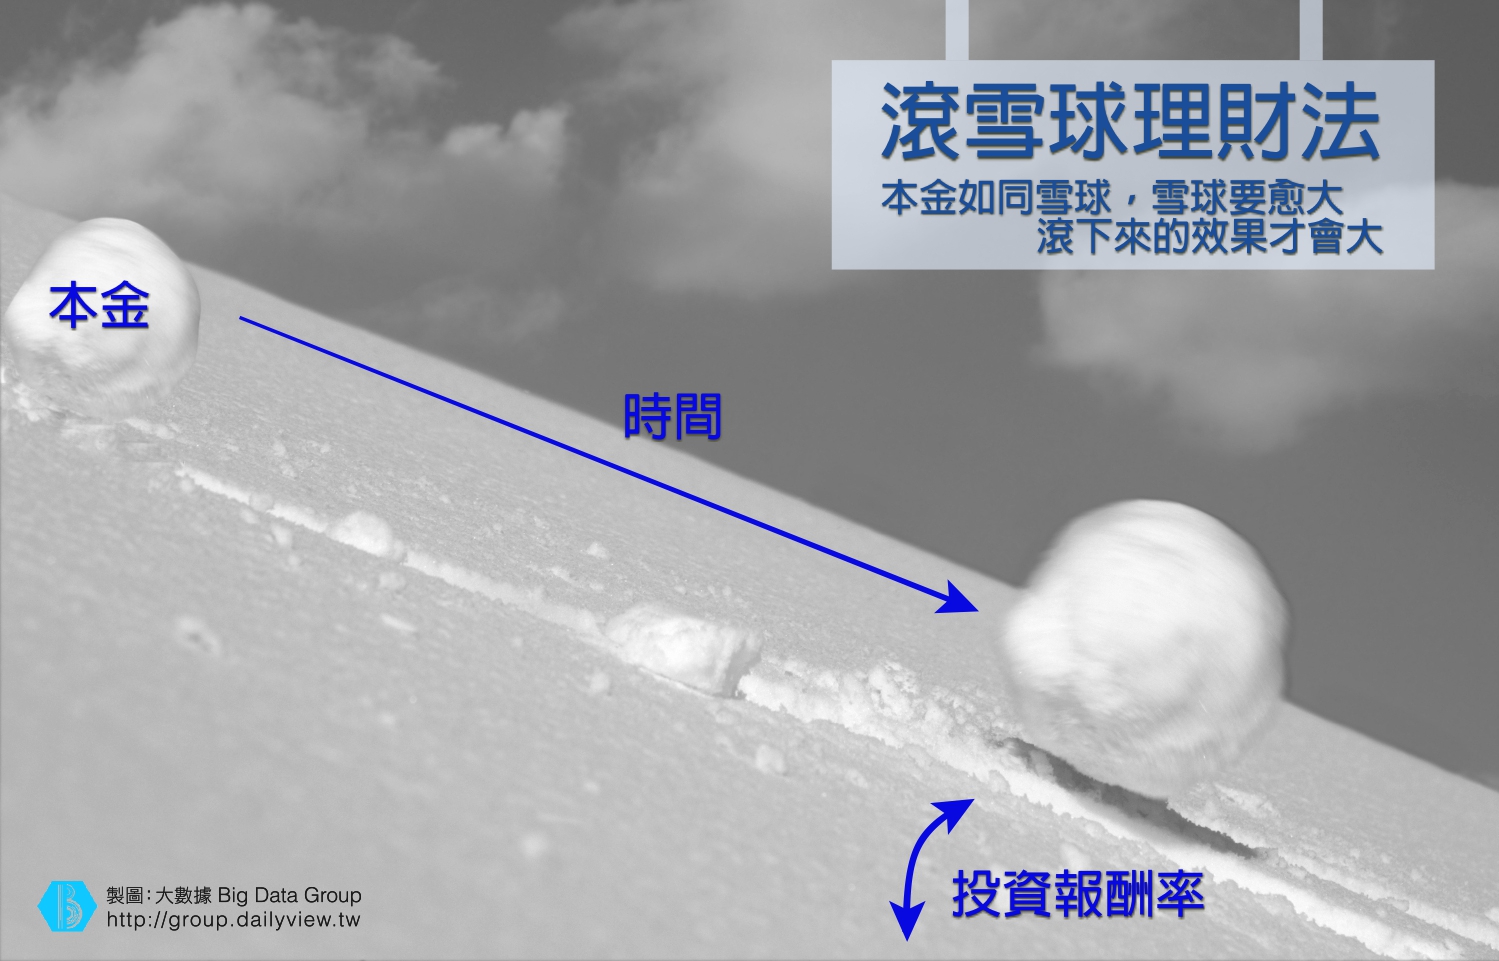 Snow ball slides downhill and speeds up.